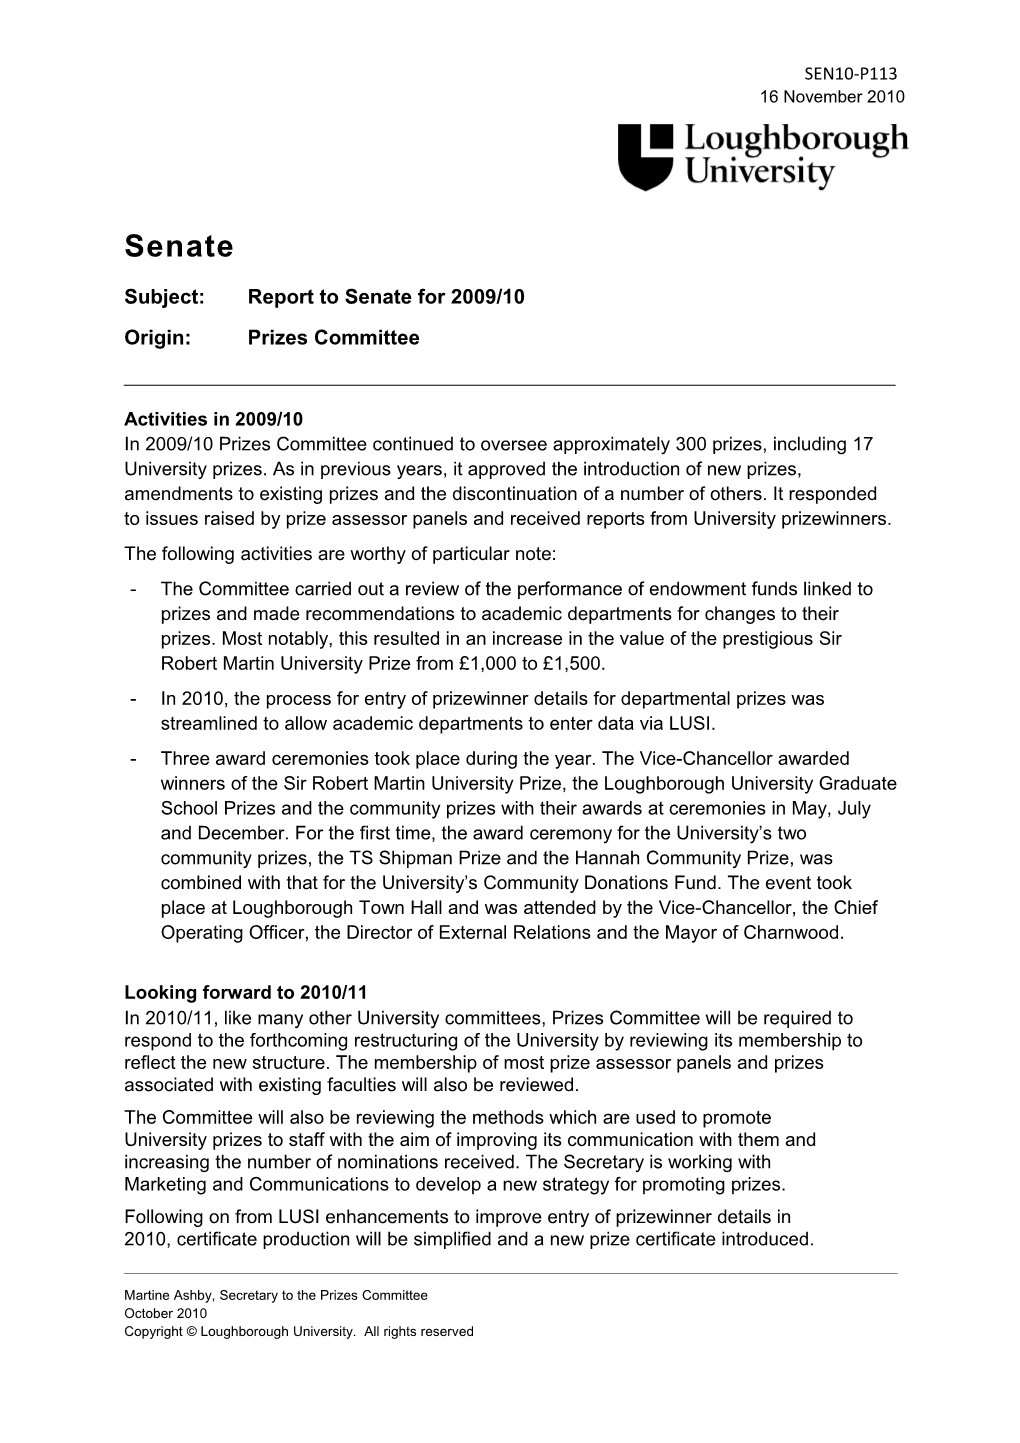 Subject:Report to Senatefor 2009/10